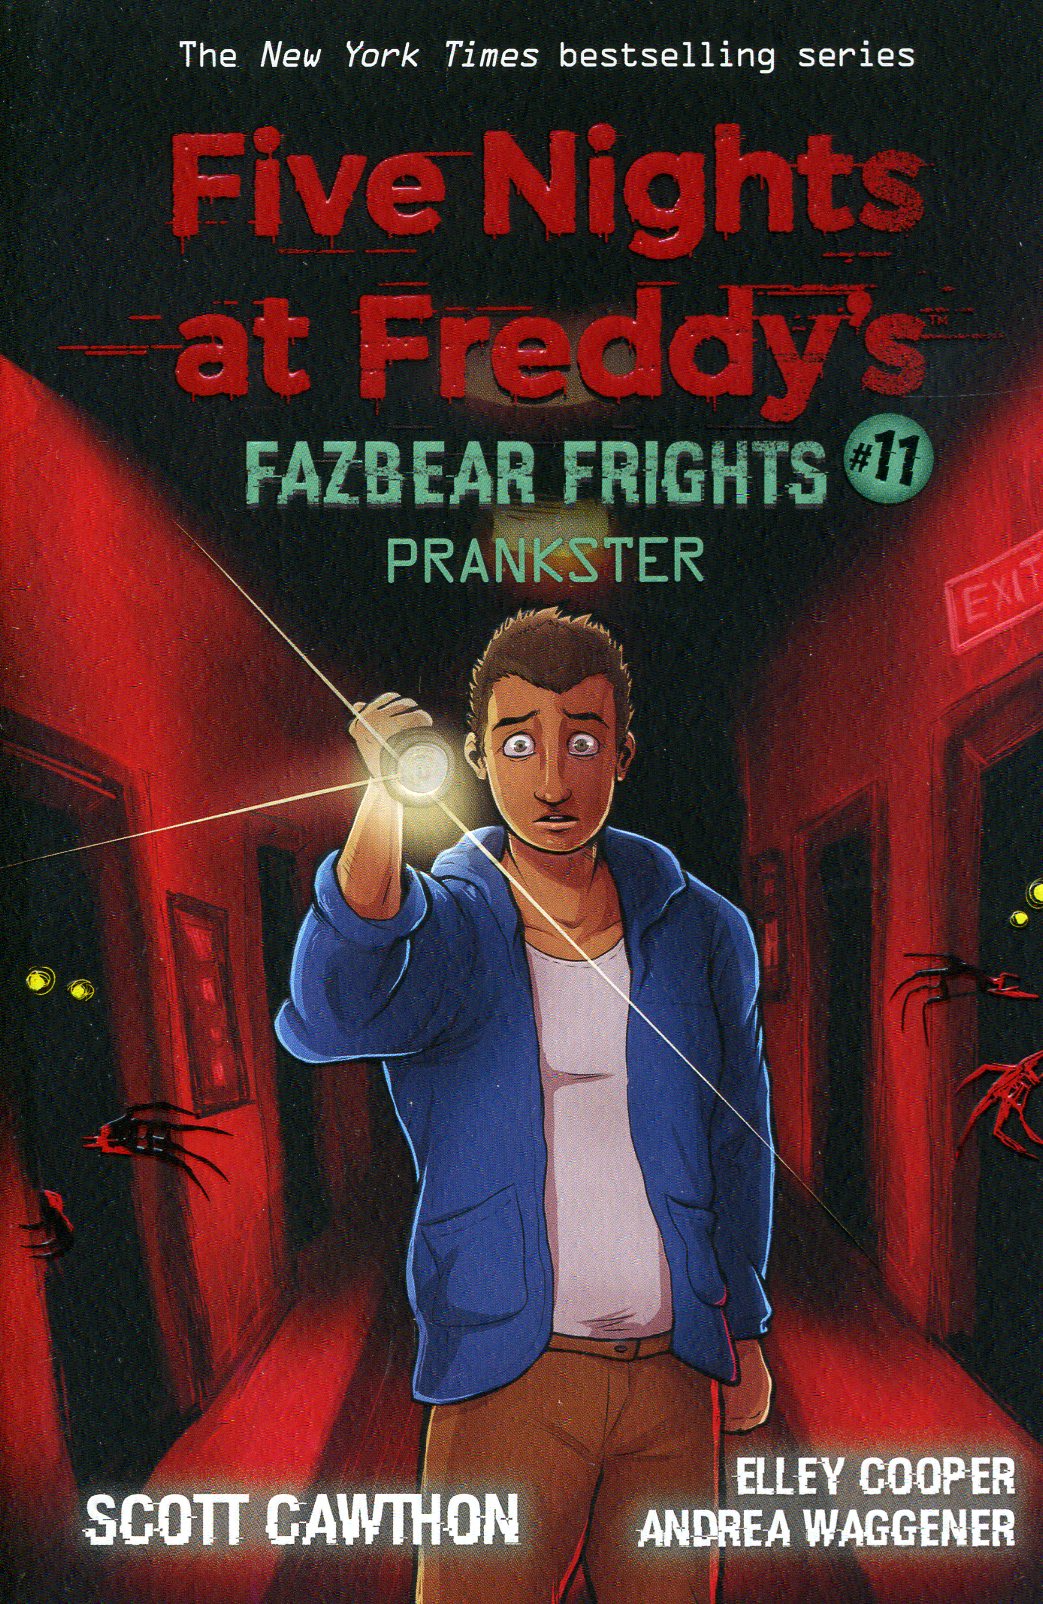 Five Nights at Freddy’s Fazbear Frights #11 Prankster by Scott Cawthon